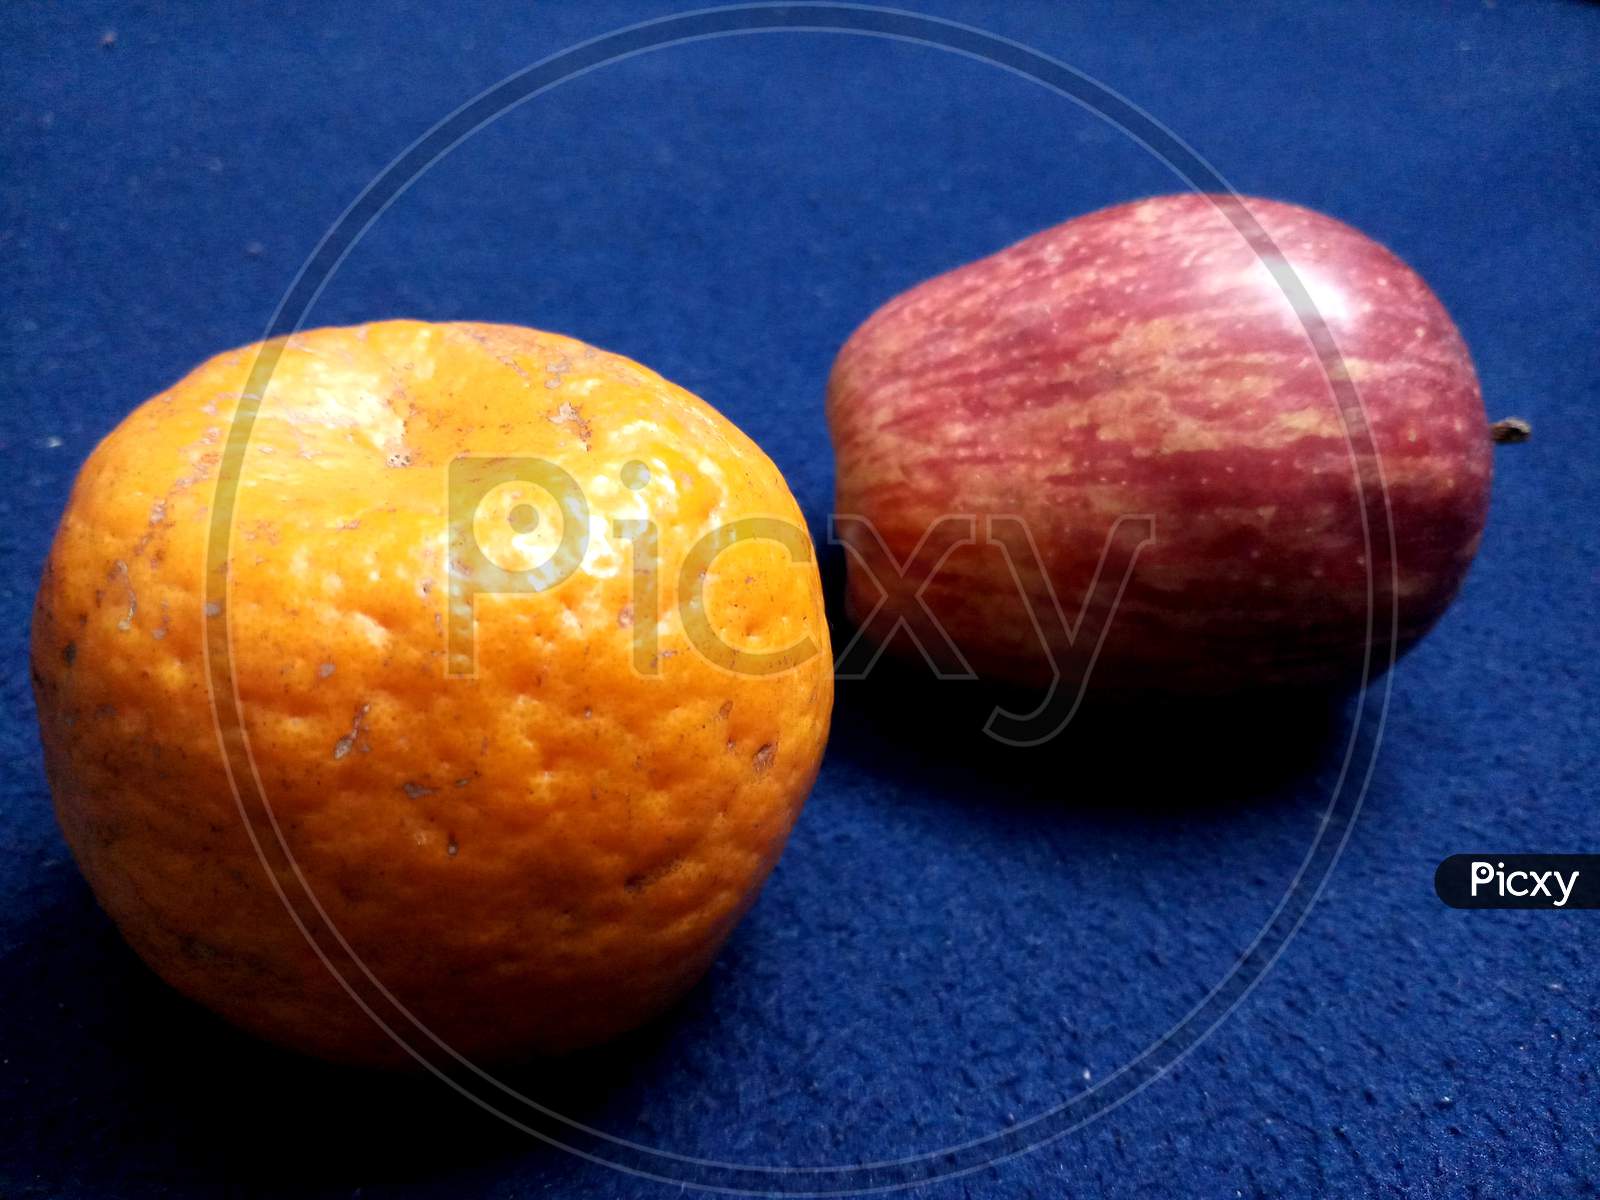 An apple and orange